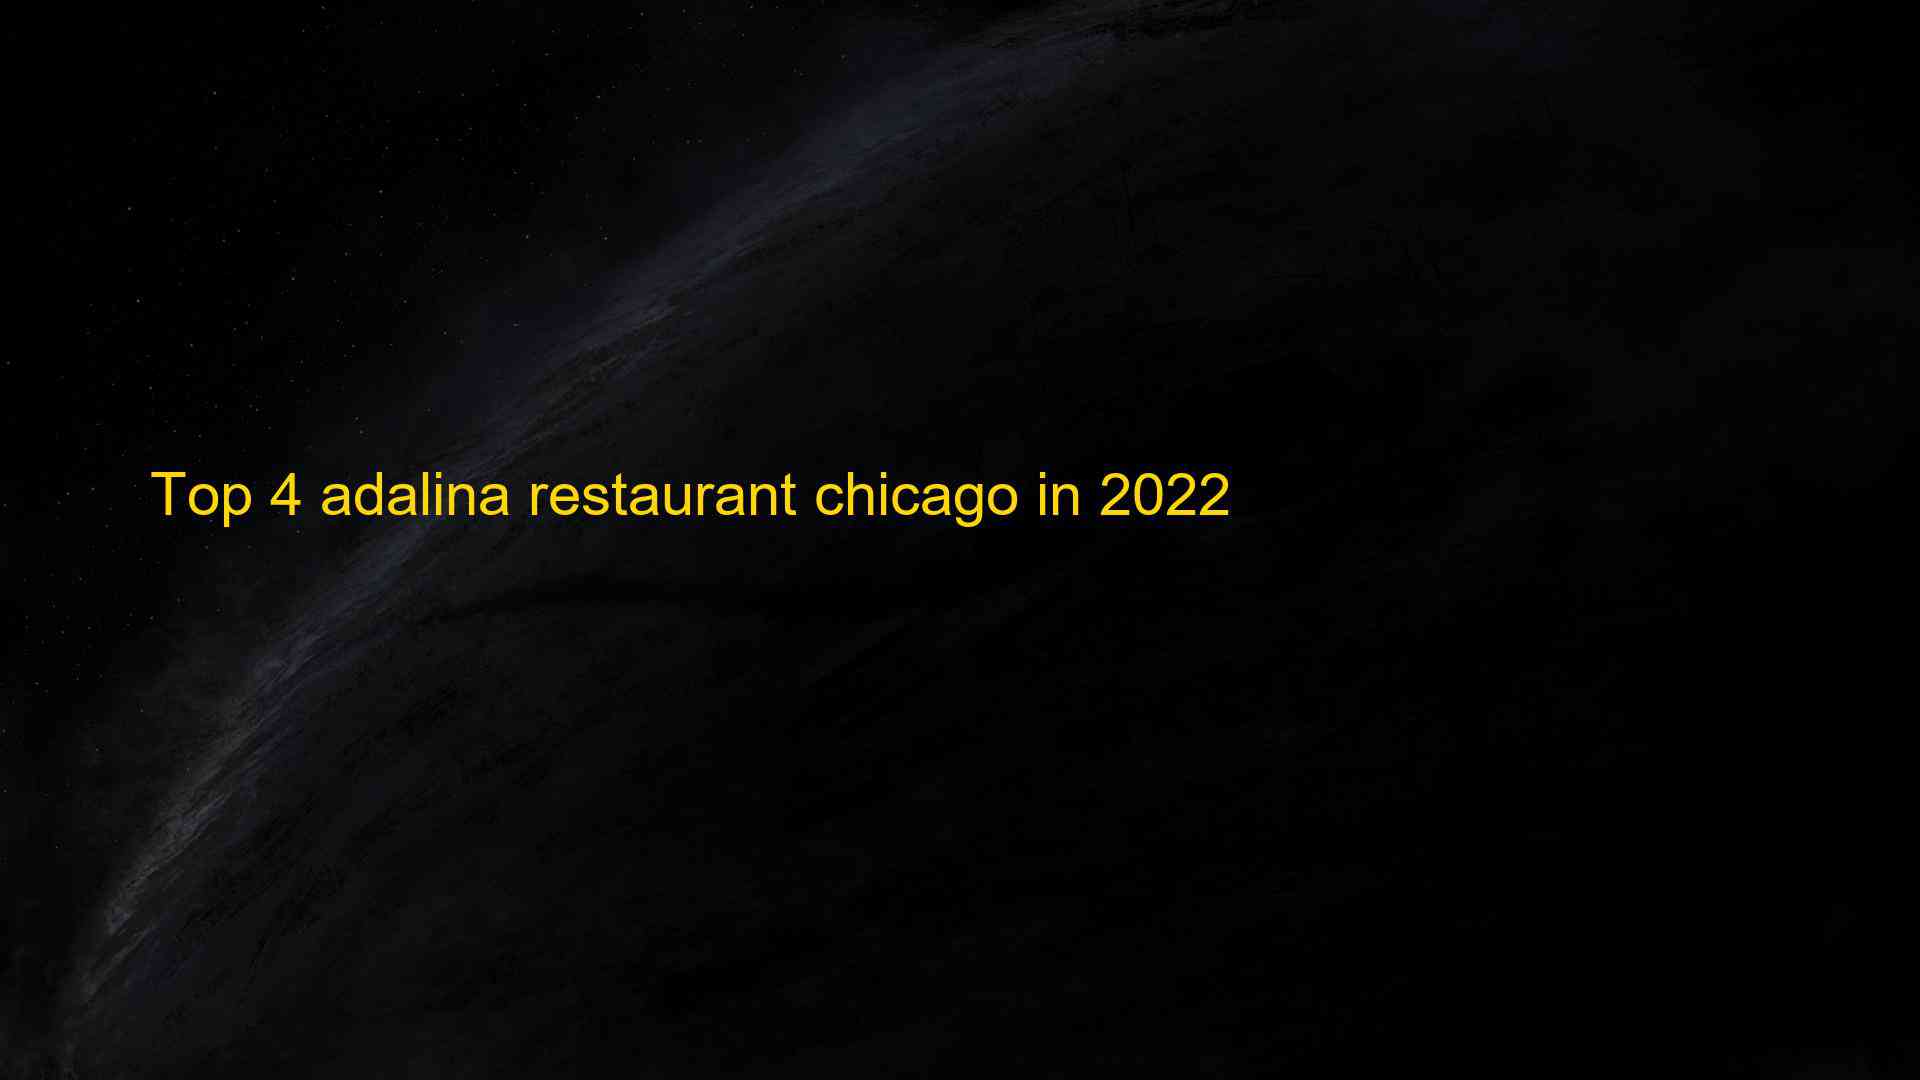 Top 4 adalina restaurant chicago in 2022 1663002074